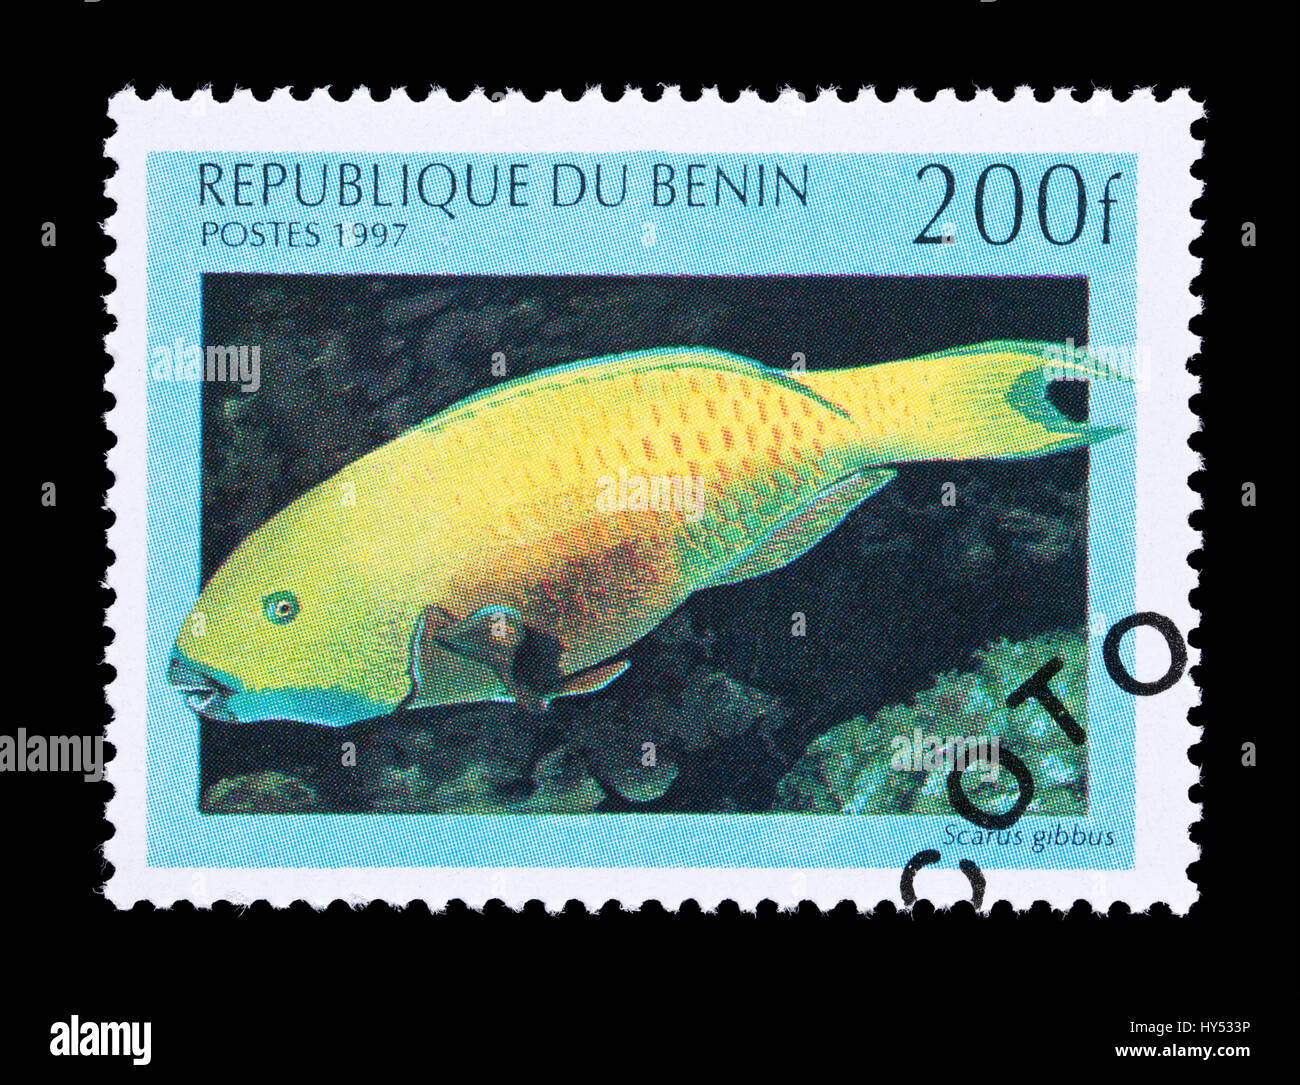 Postage stamp from Benin depicting a Heavybeak parrotfish (Scarus gibbus) Stock Photo